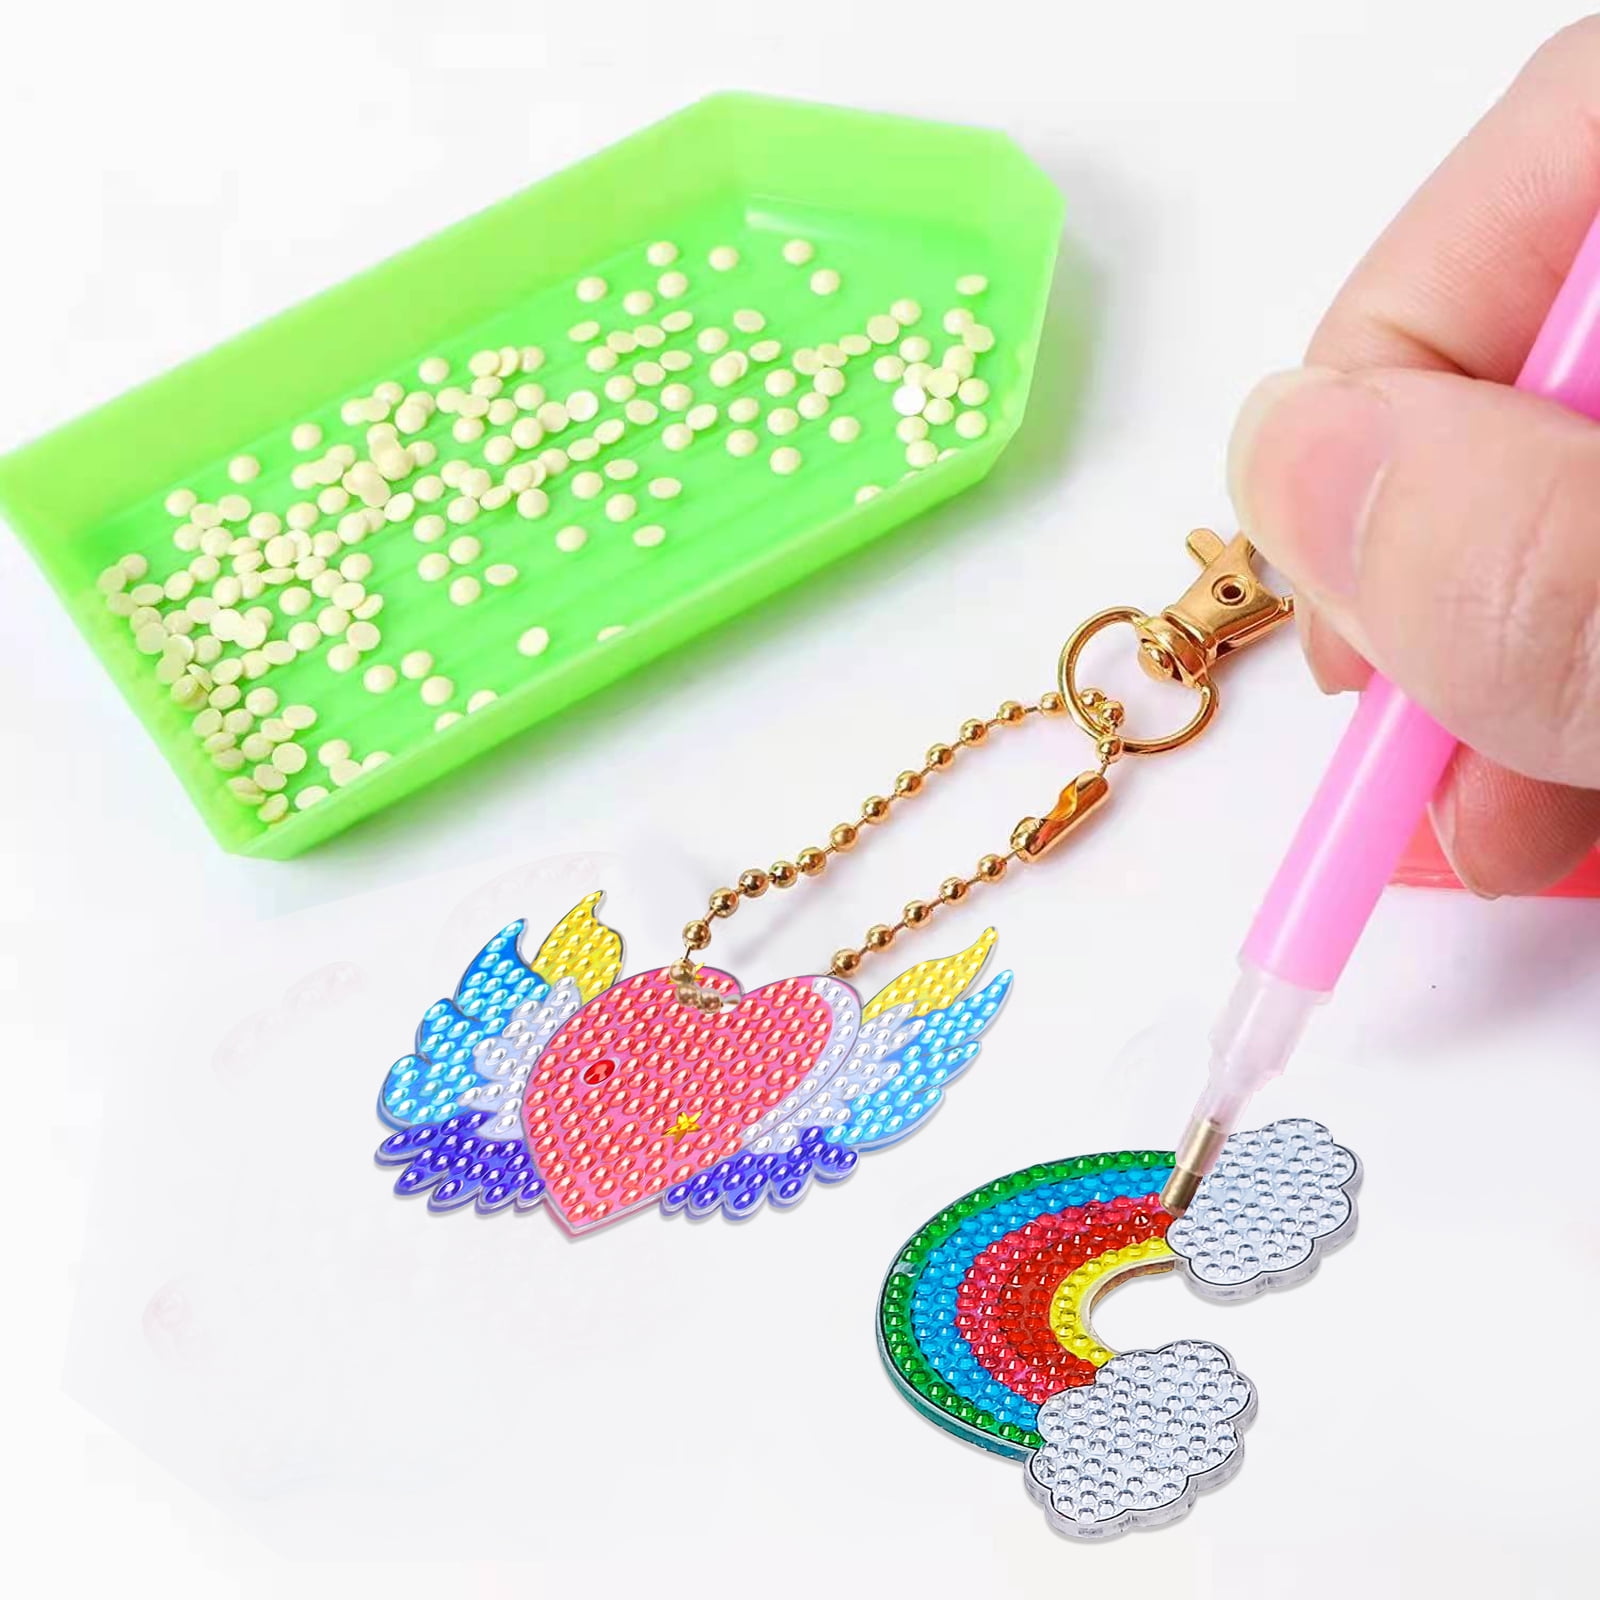 Feyi Fay's Charming Jewelry Making Kit - DIY Craft Kit For Kids